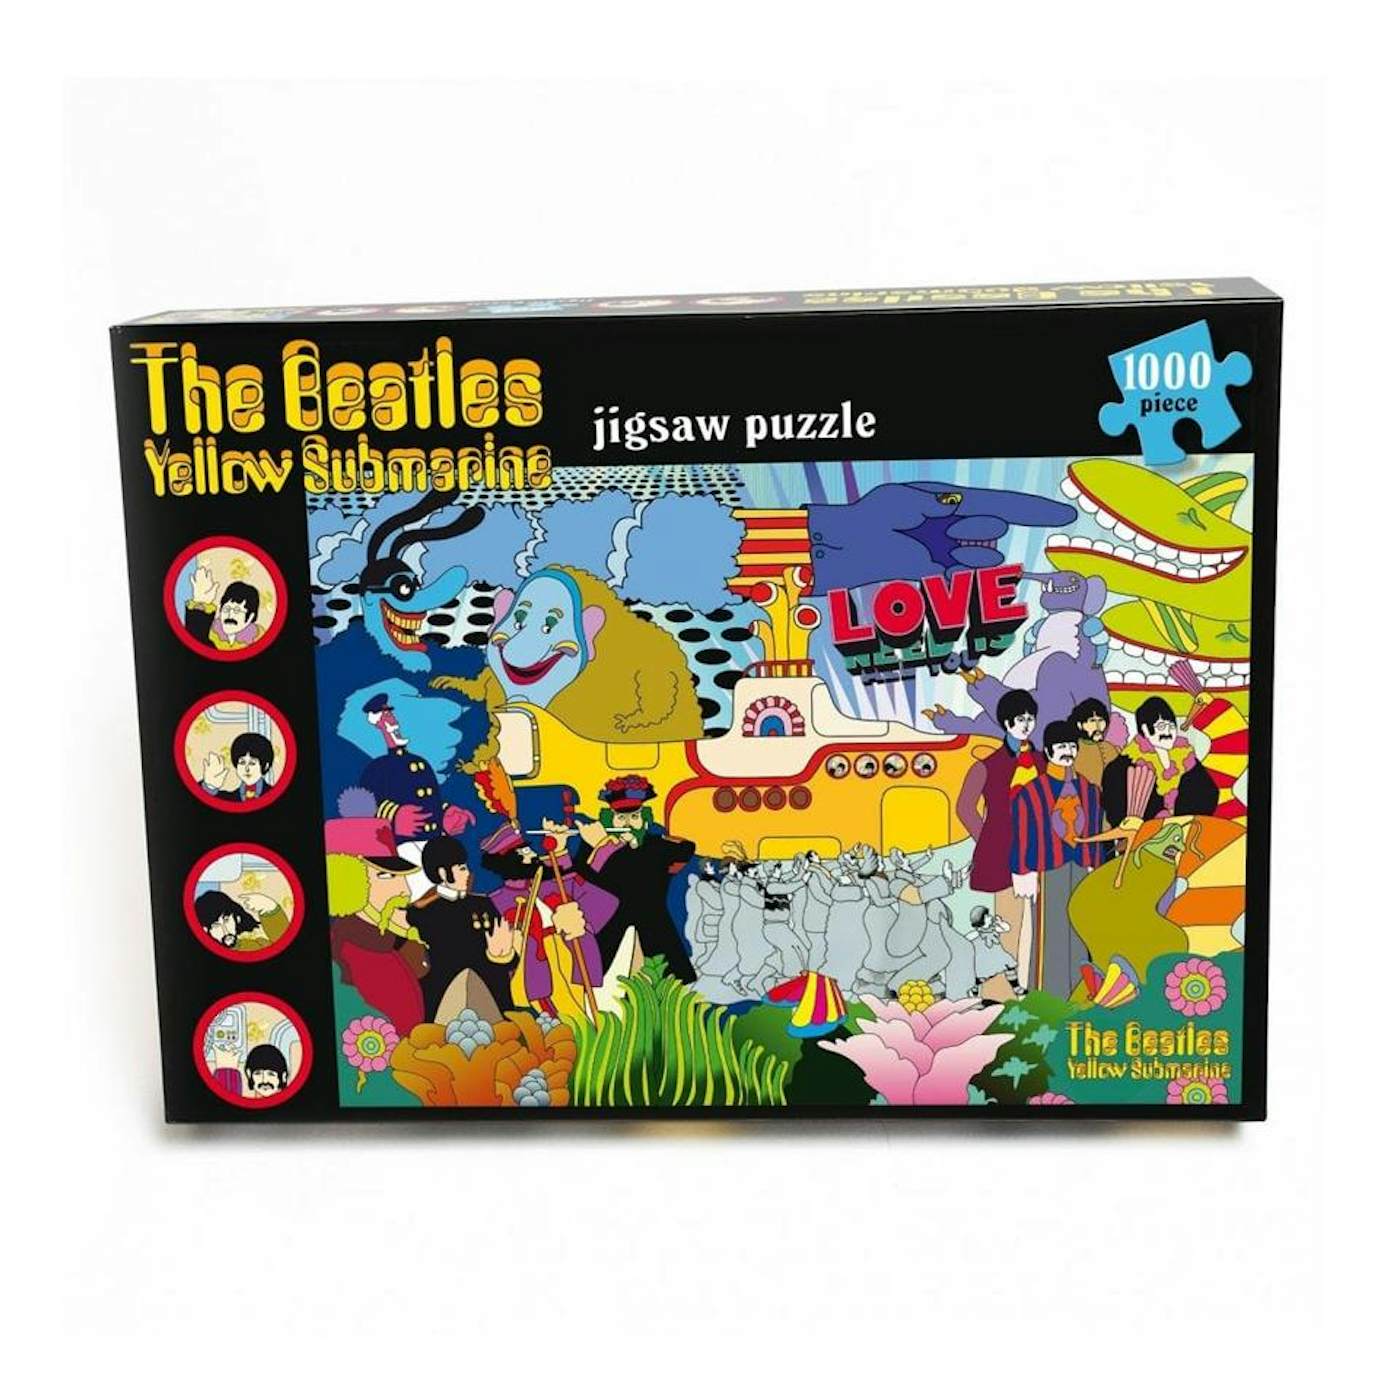 The Beatles Jigsaw Puzzle - Yellow Submarine 10 00 Piece